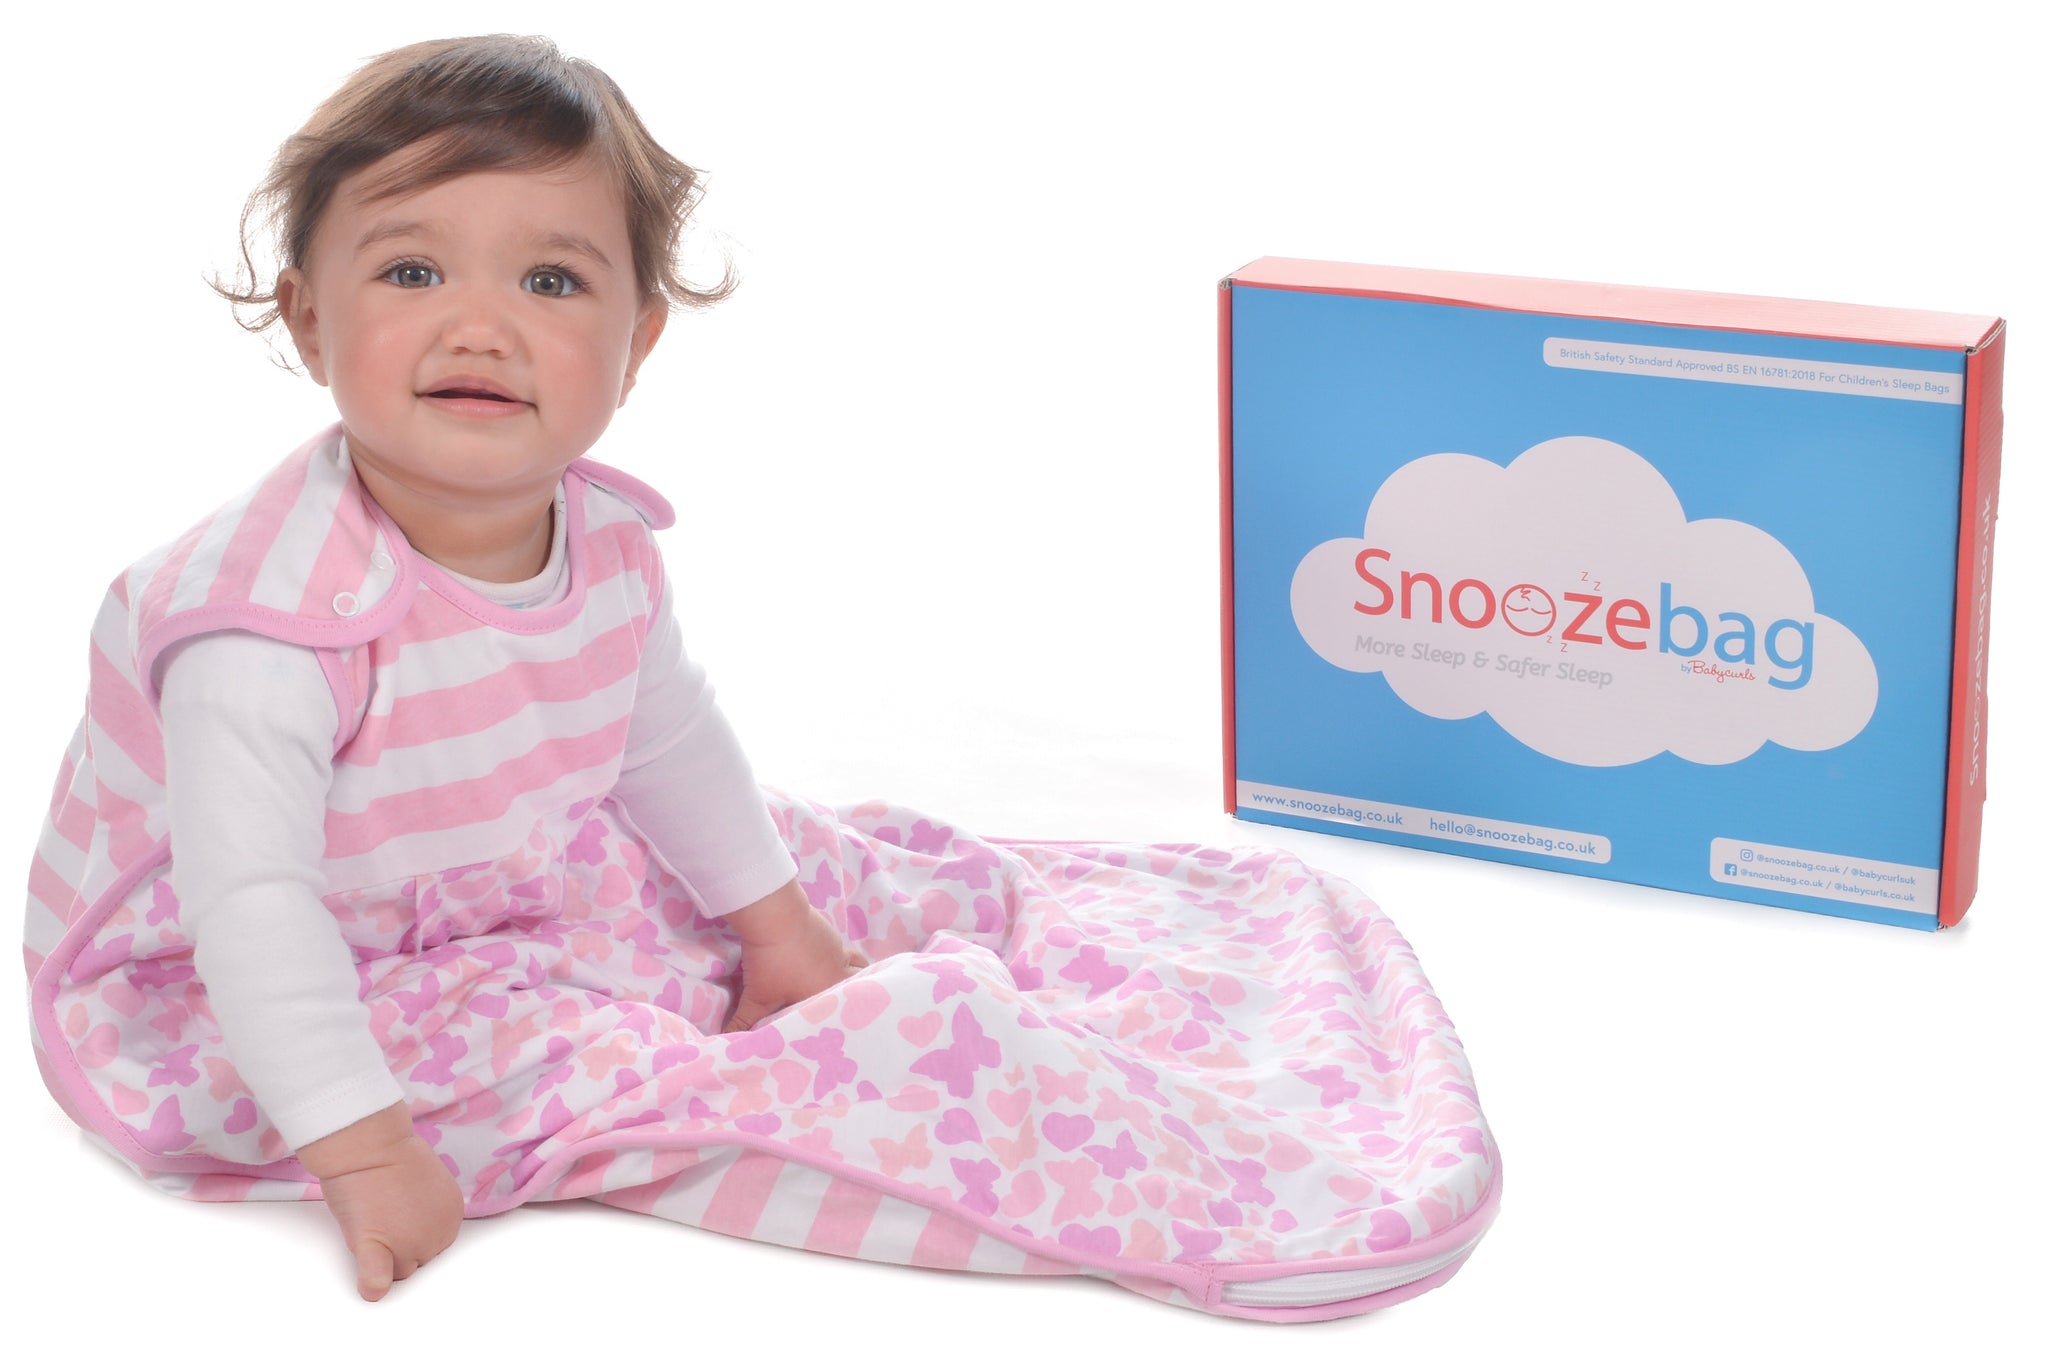 Snoozebag Baby Sleeping Bag Butterflies & Hearts 6-18 Months - 2.5 Tog